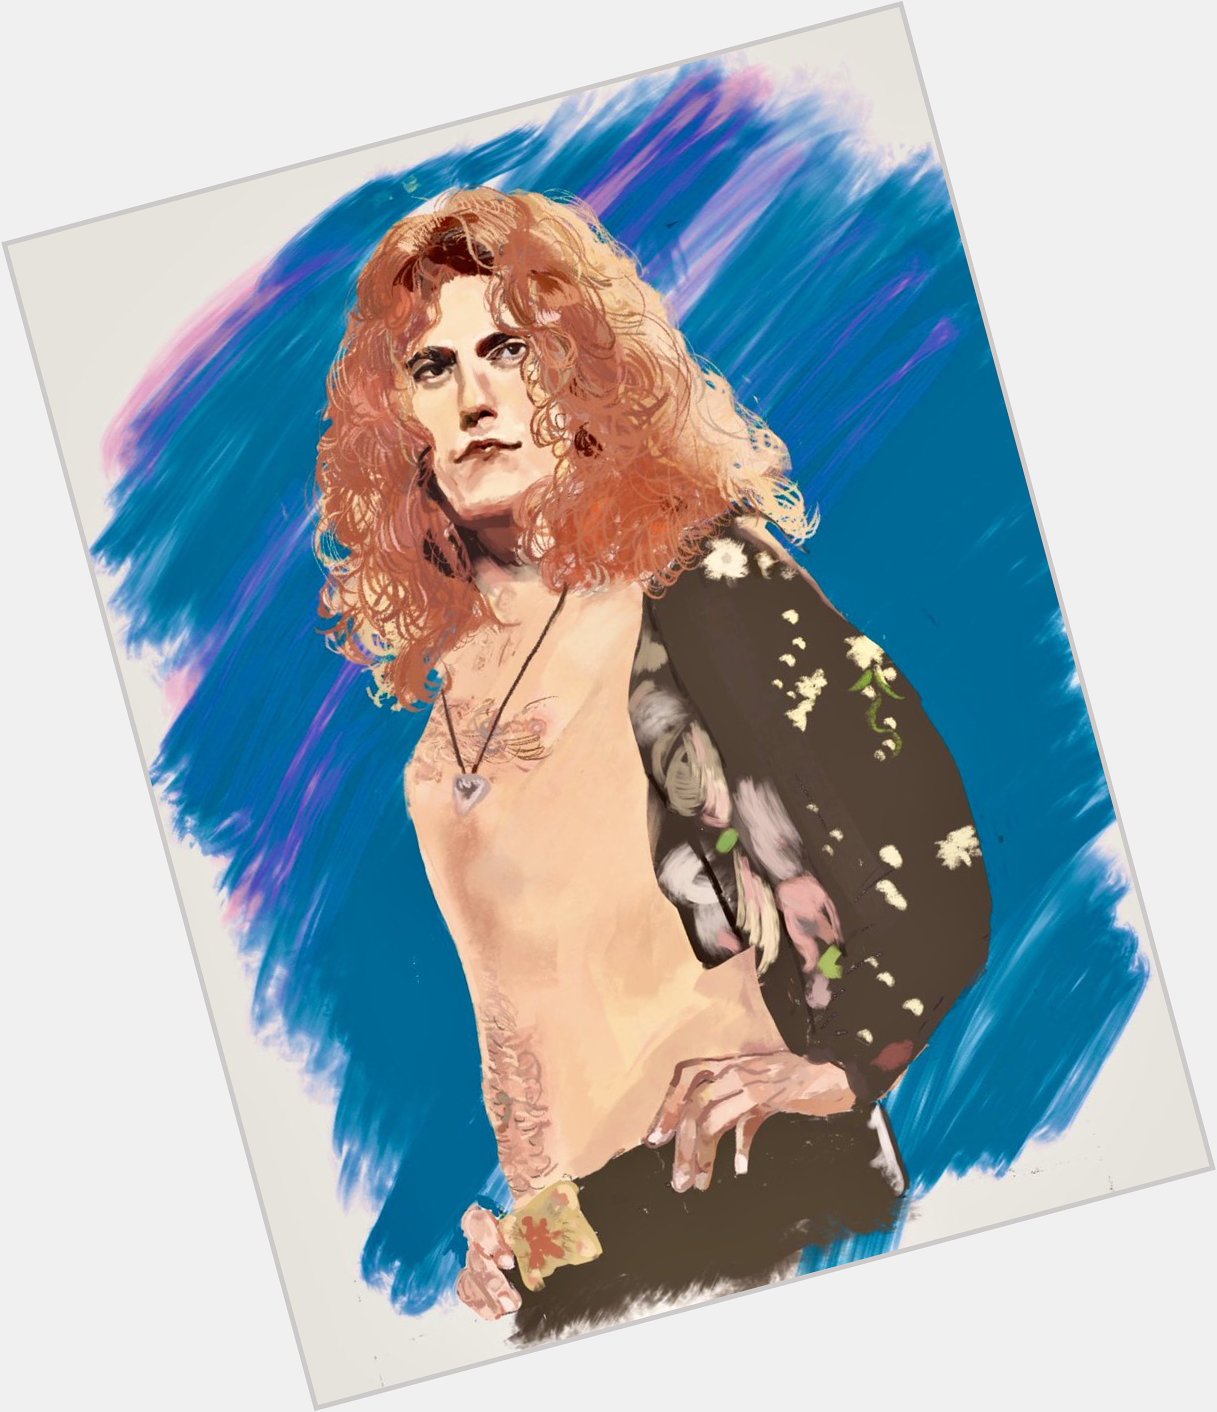                  ...     Happy Birthday Robert Plant                            